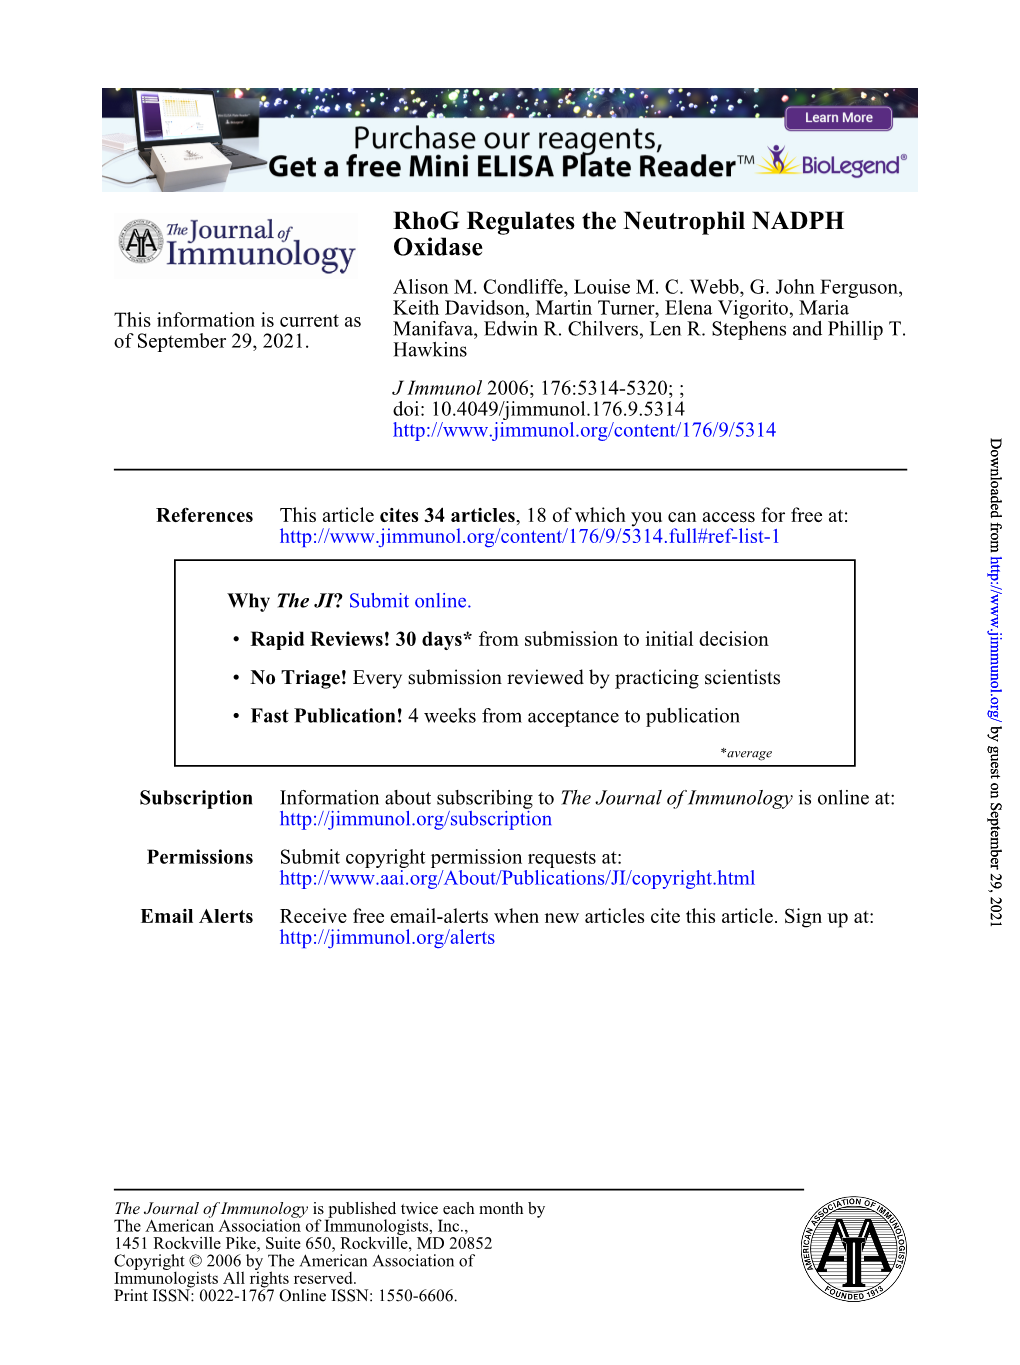 Oxidase Rhog Regulates the Neutrophil NADPH